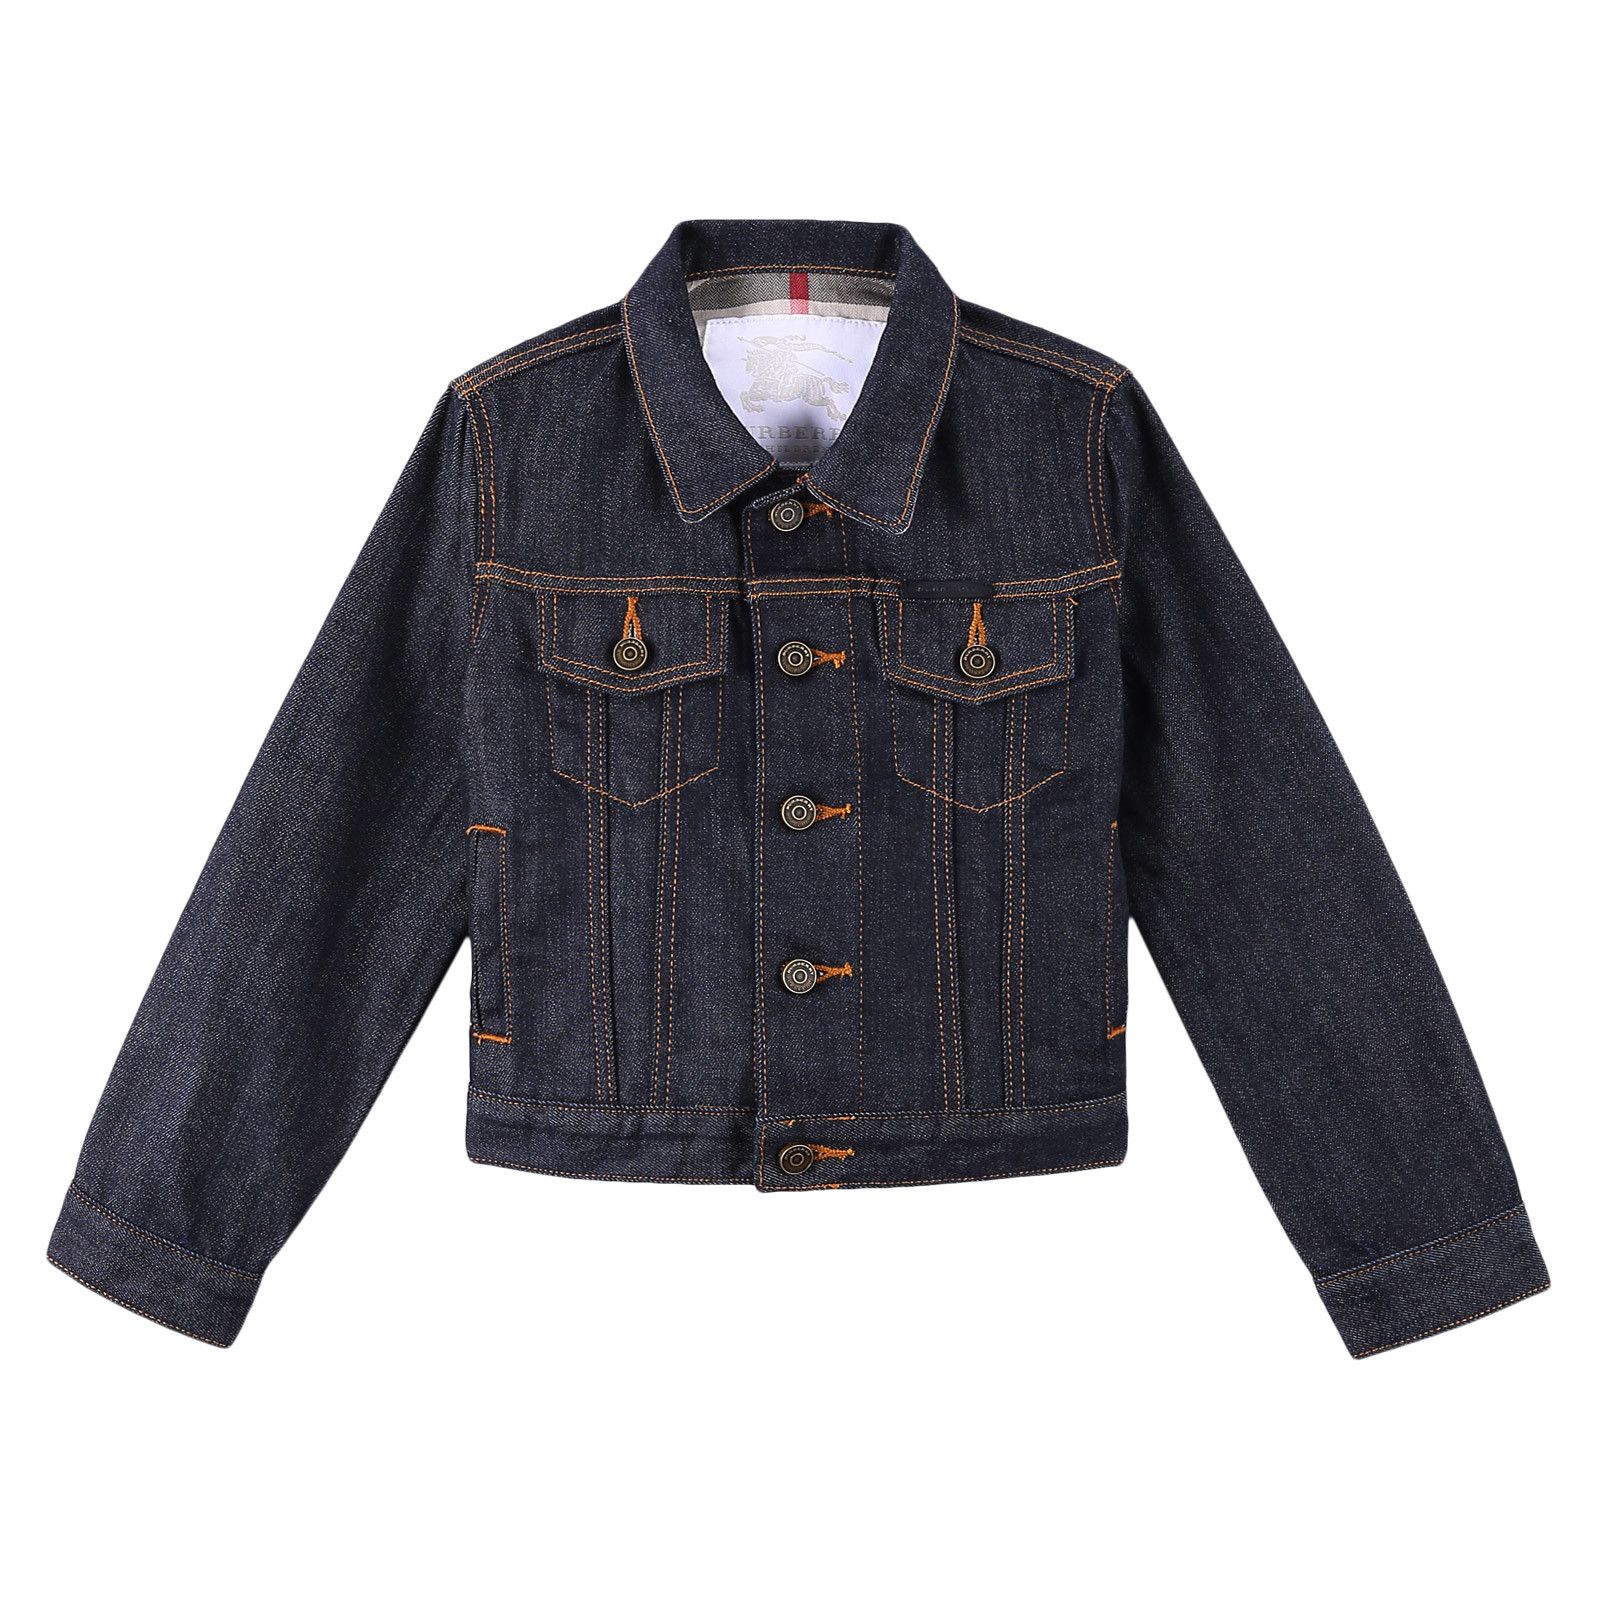 Boys Navy Blue Cotton Denim Jacket - CÉMAROSE | Children's Fashion Store - 1